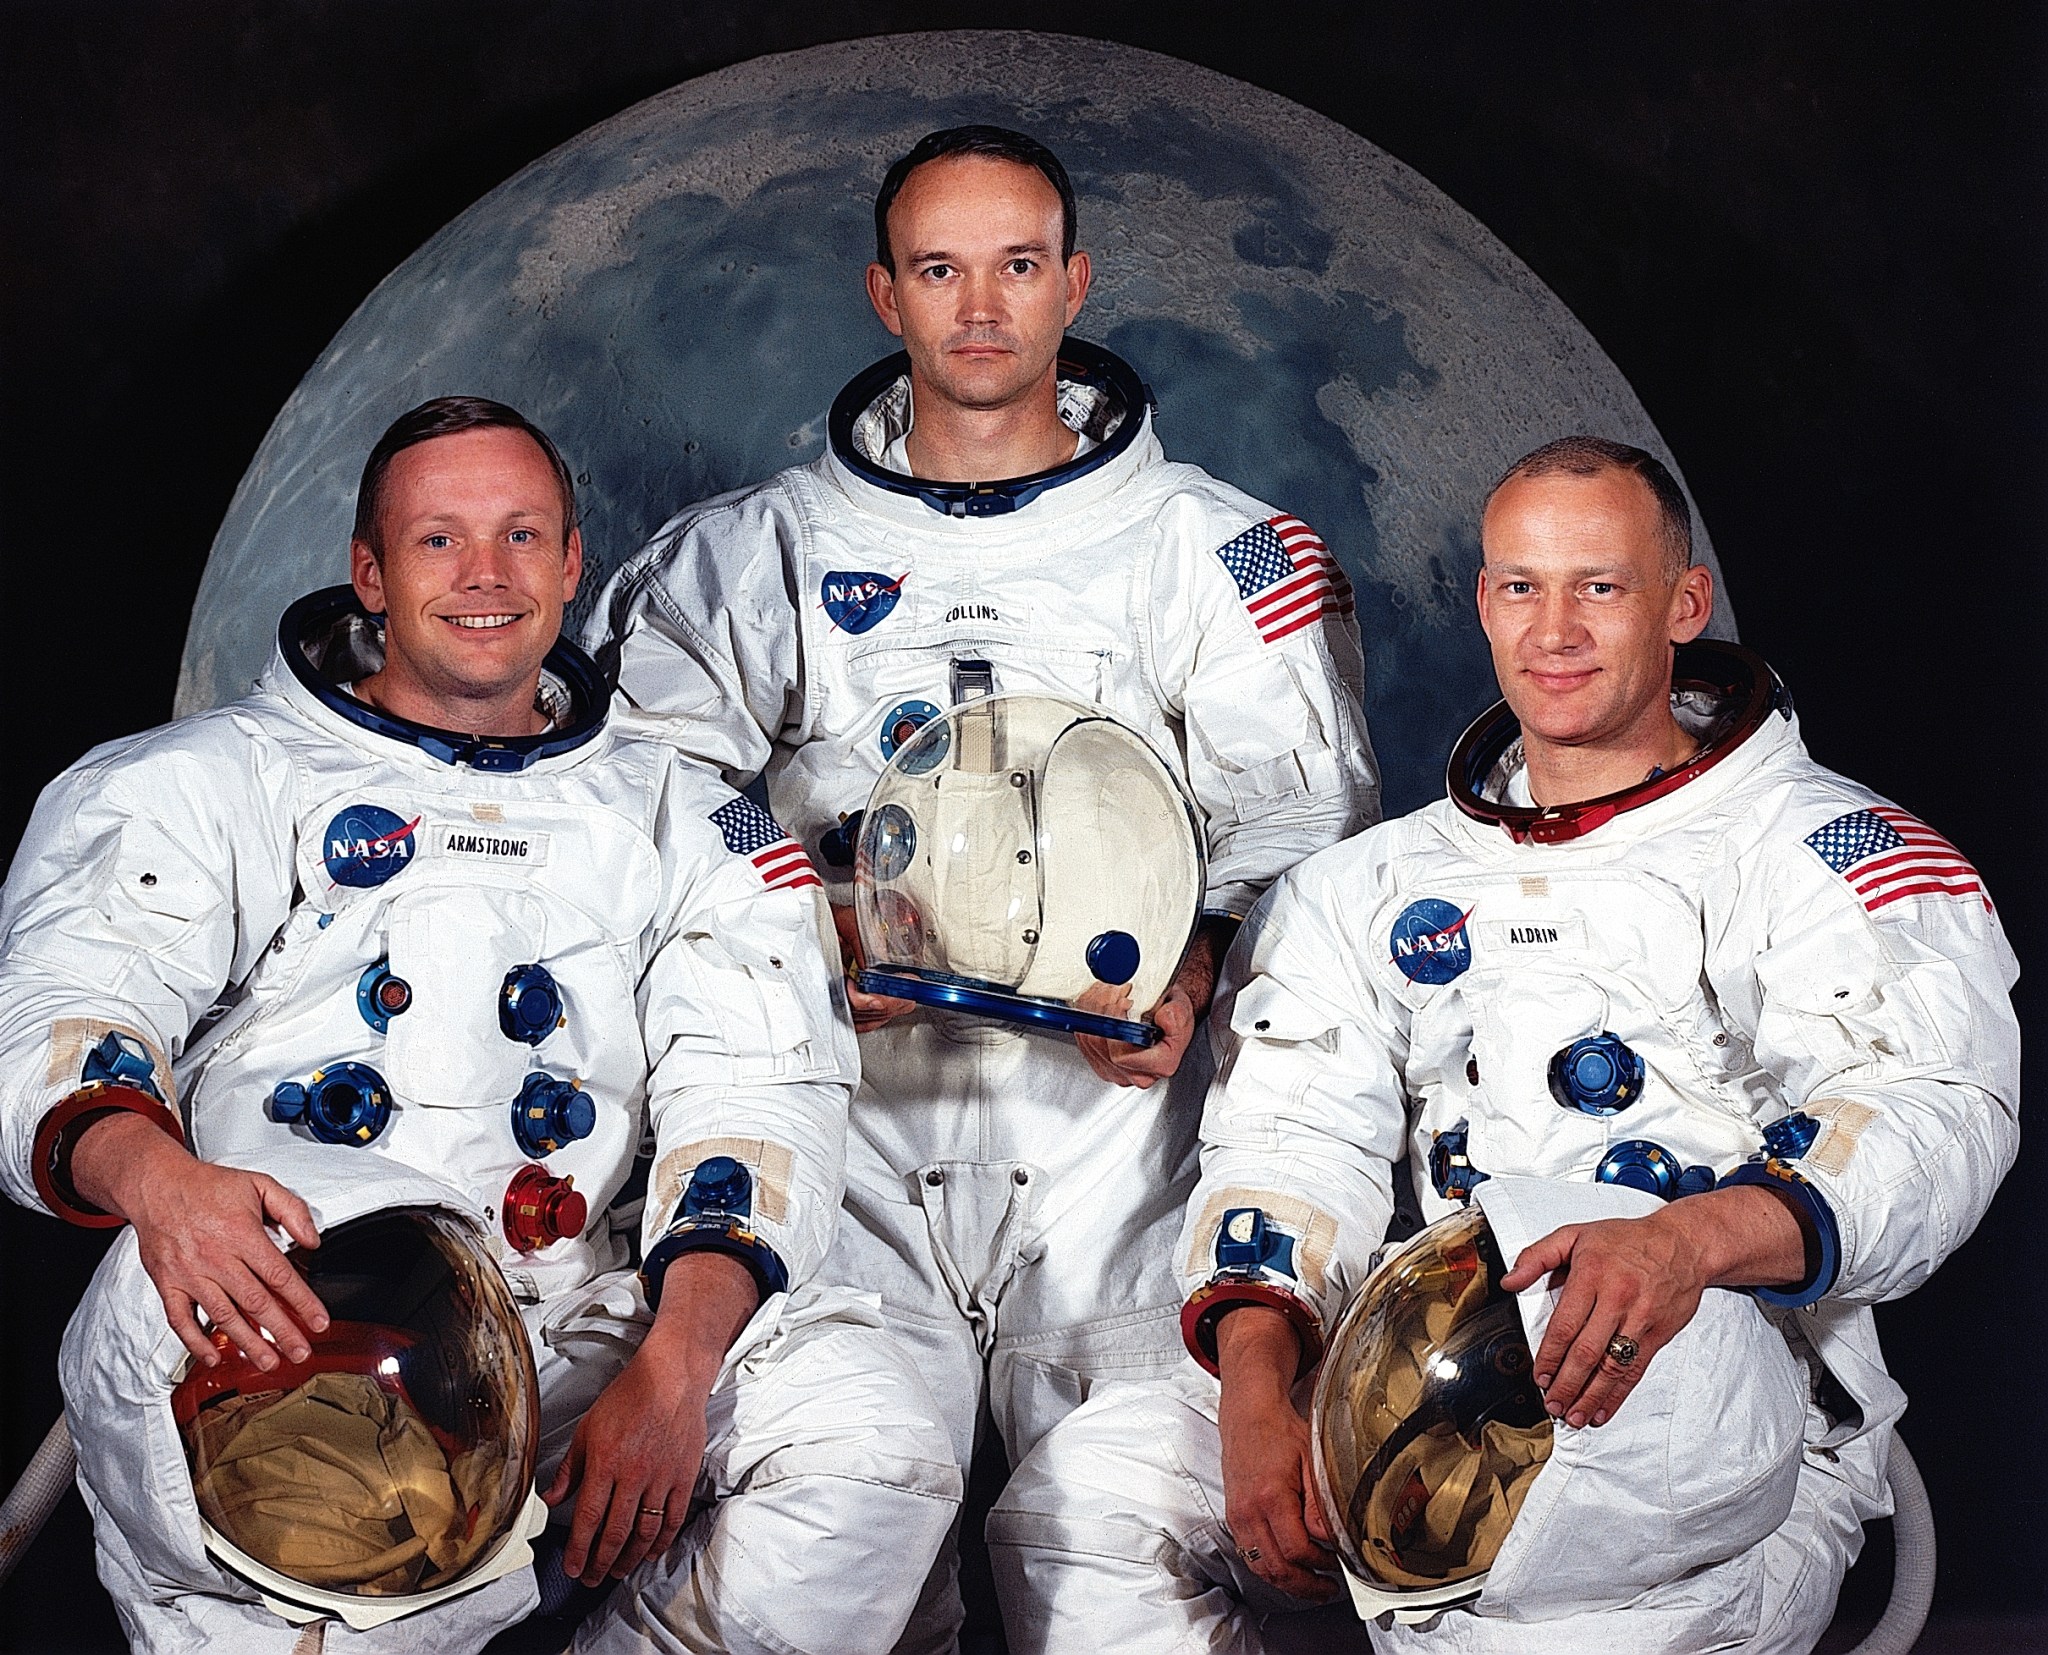 From left, Neil A. Armstrong, commander; Michael Collins, command module pilot; and Buzz Aldrin,  lunar module pilot.